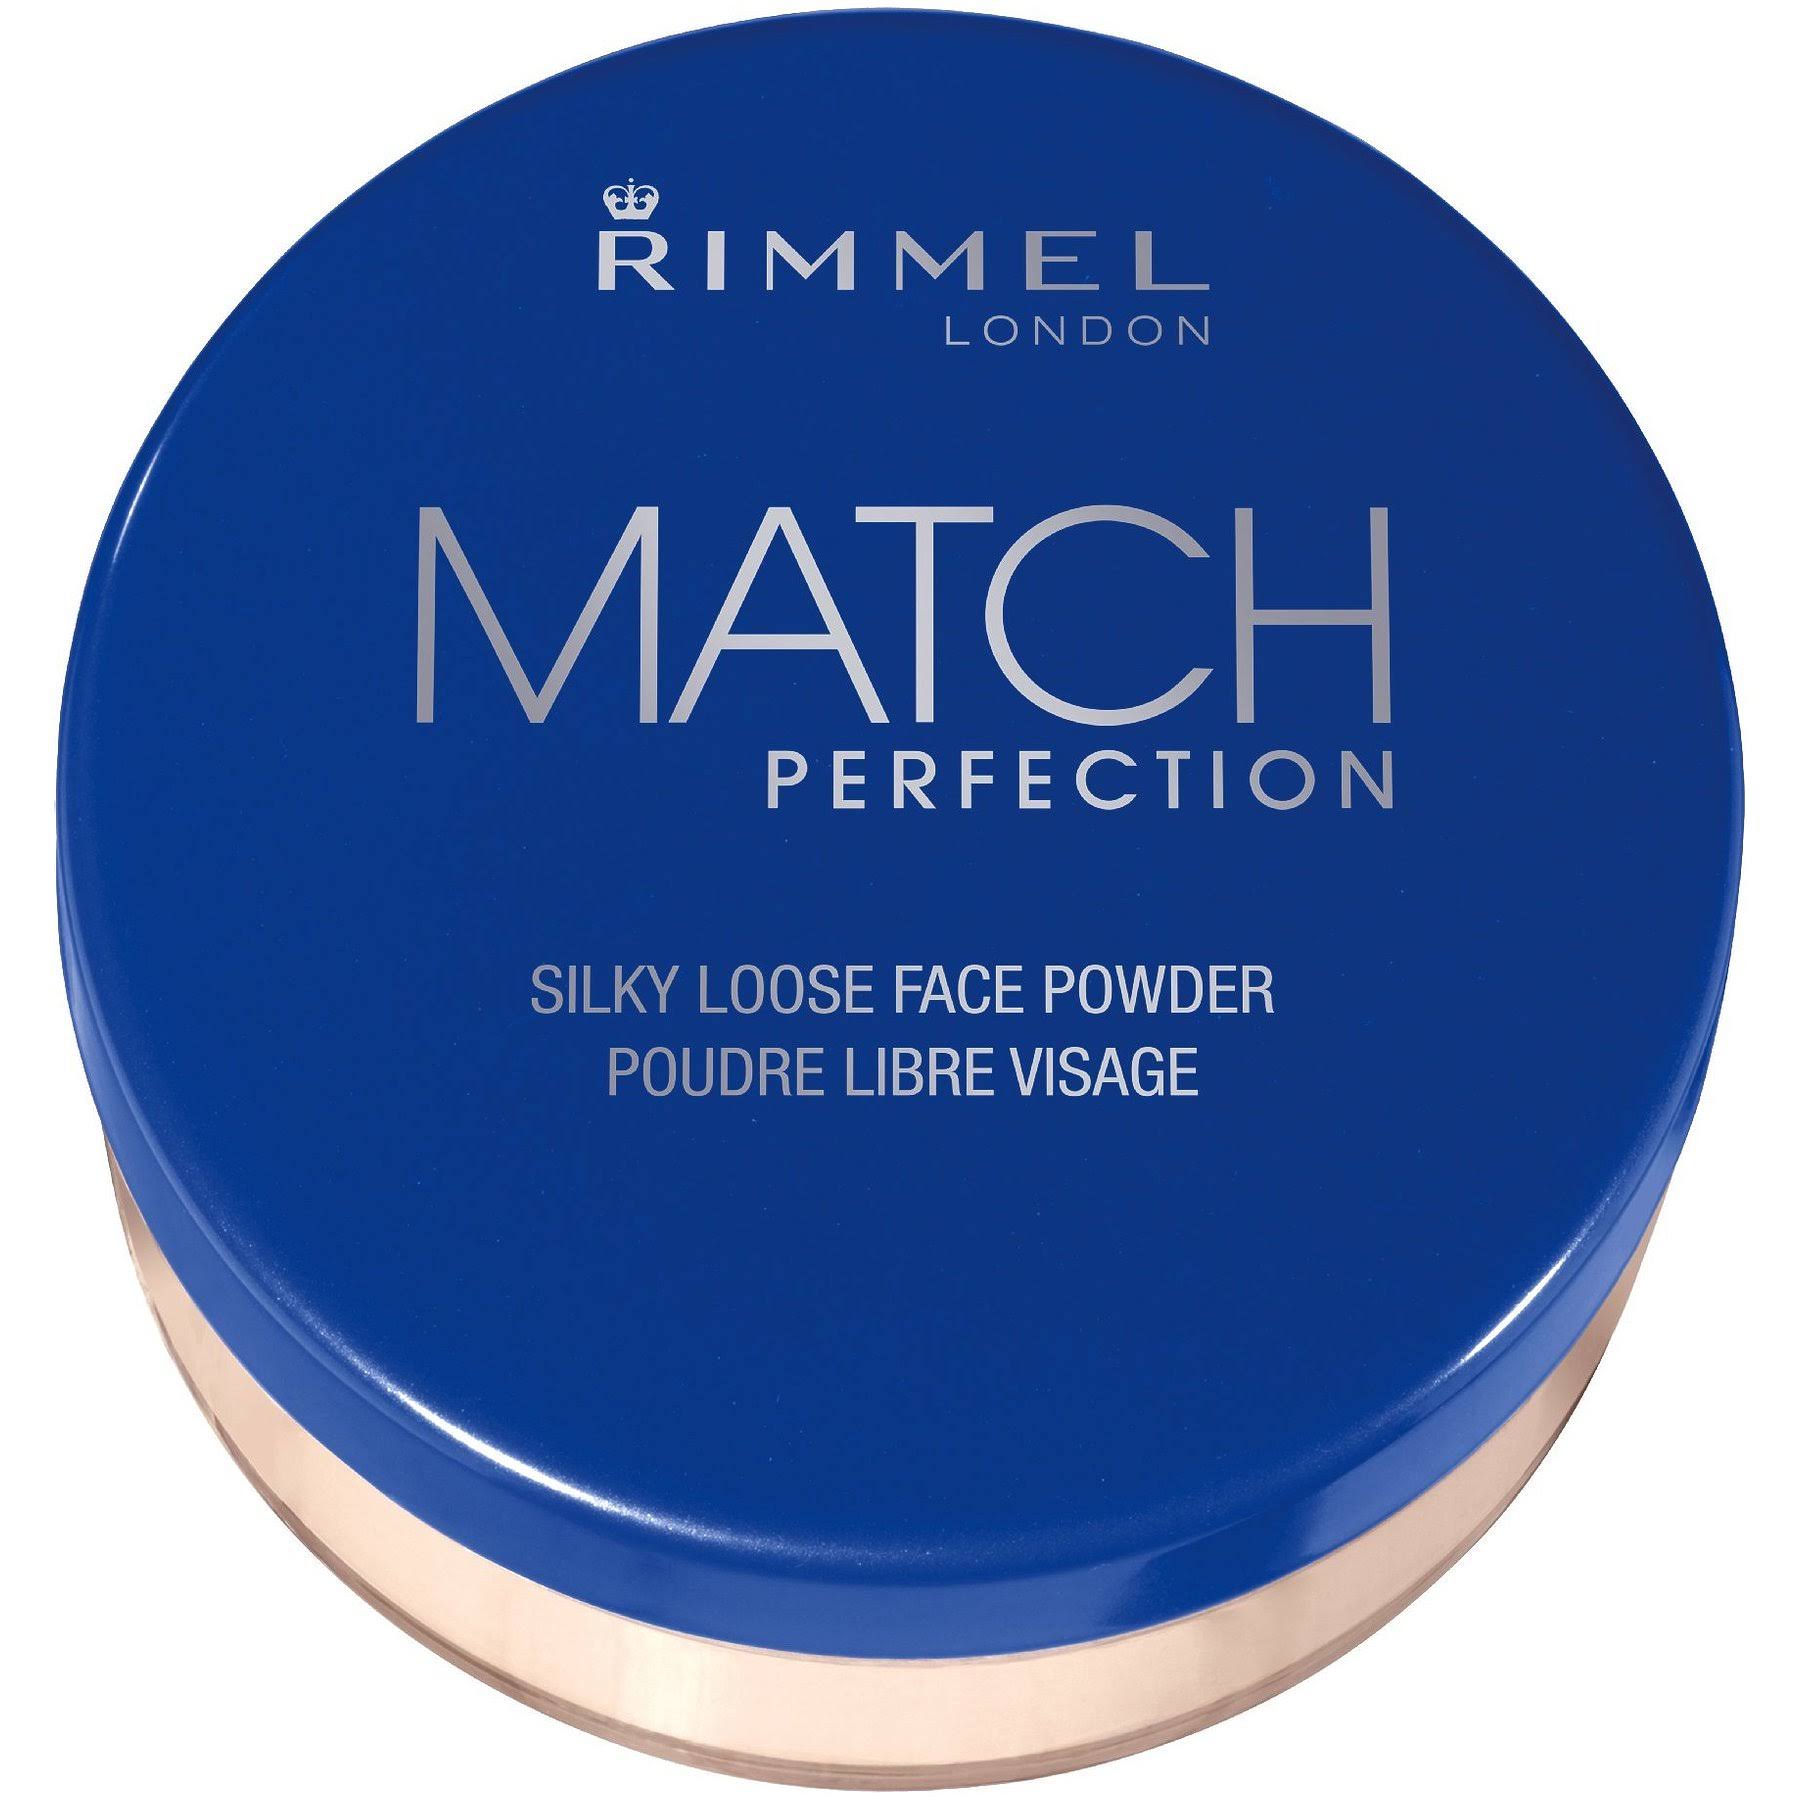 Rimmel London Match Perfection Silky Loose Face Powder - 001 Transparent, 10g